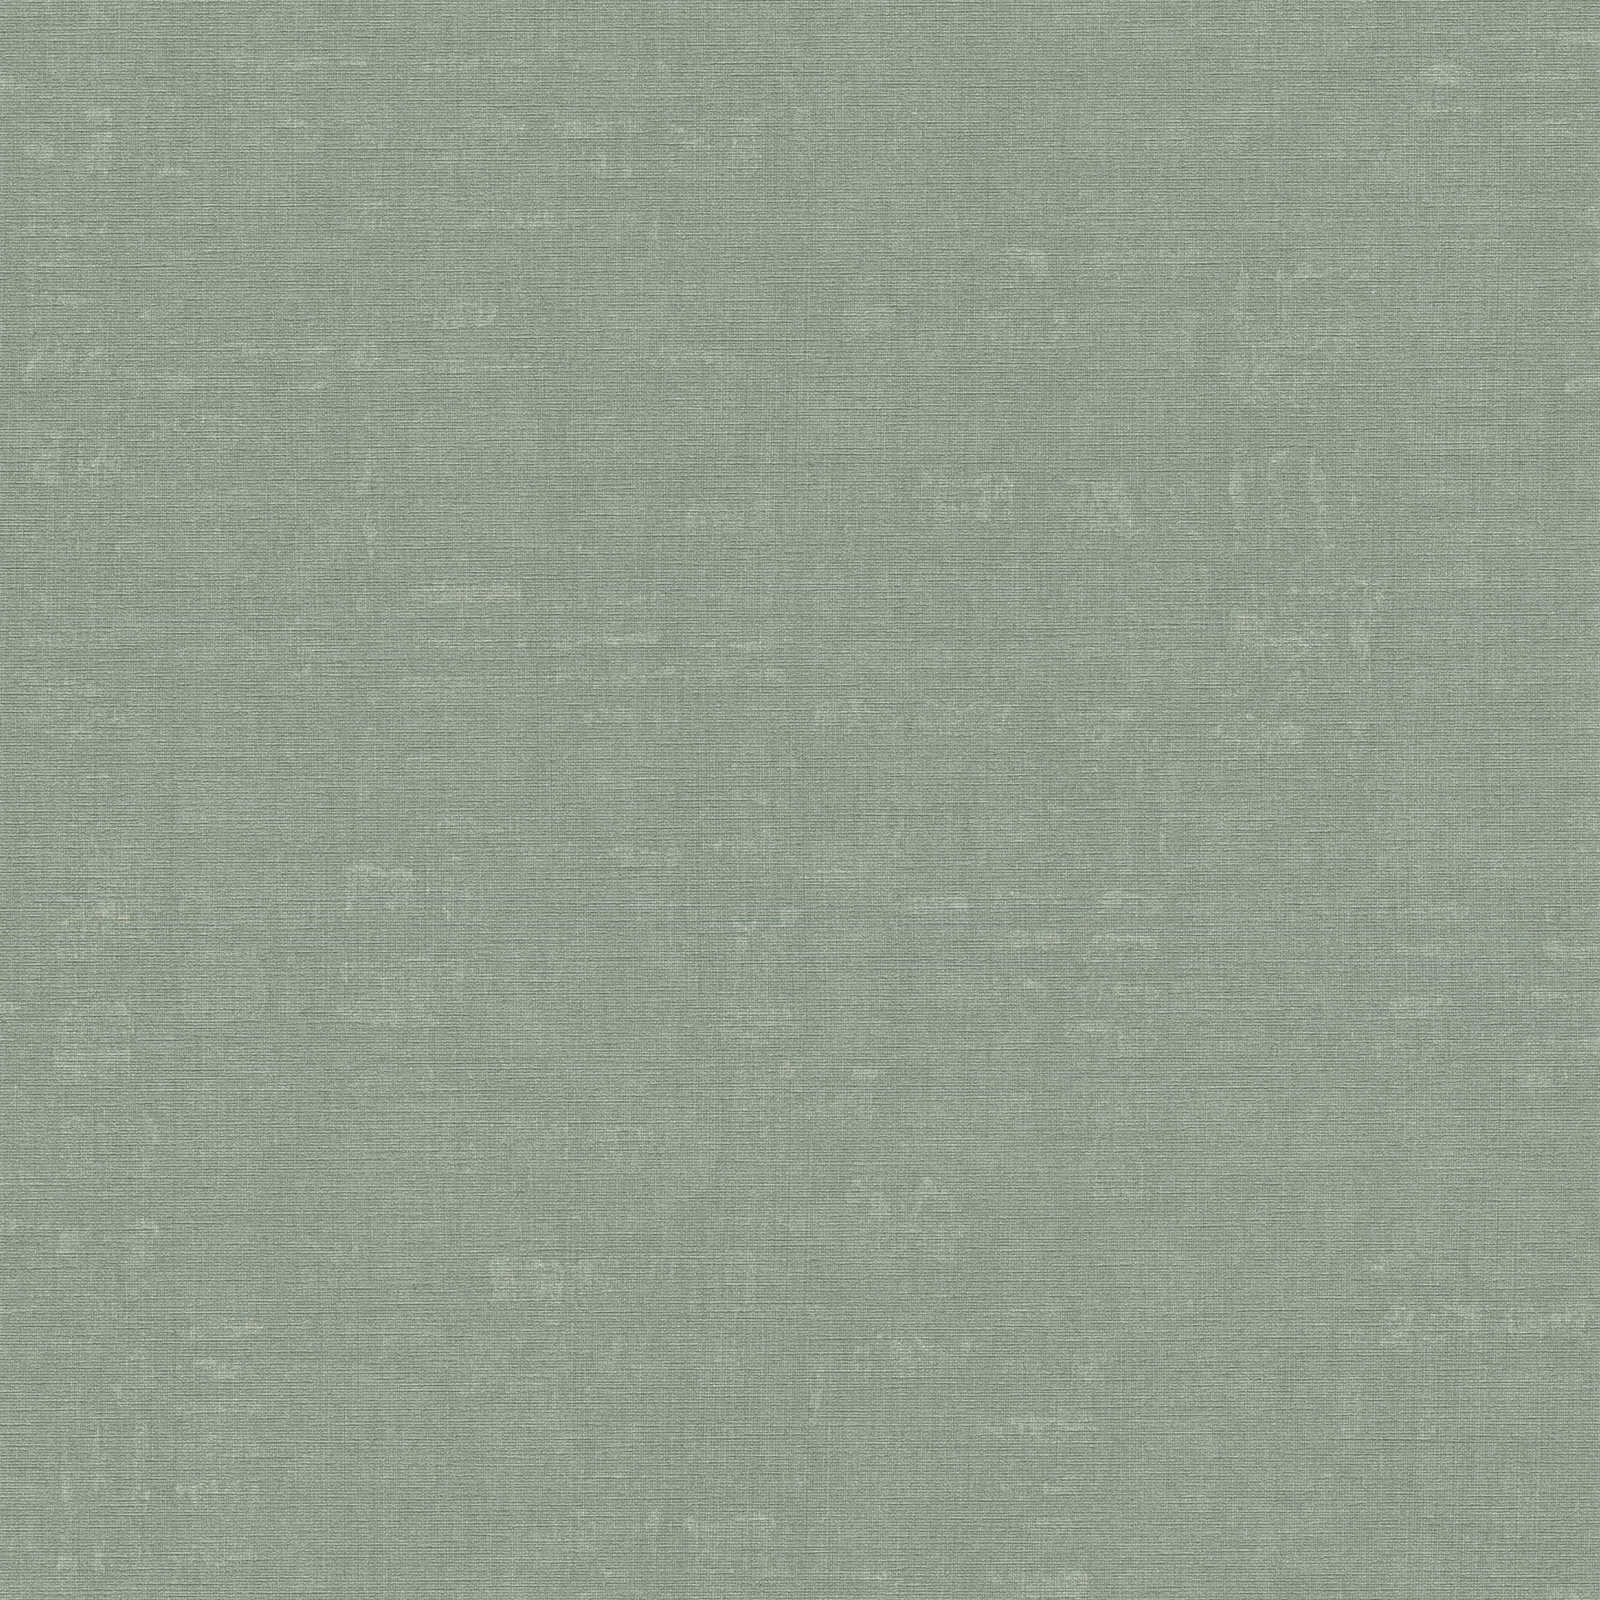 Nara - Mottled Plain plain wallpaper AS Creation Roll Green  387456